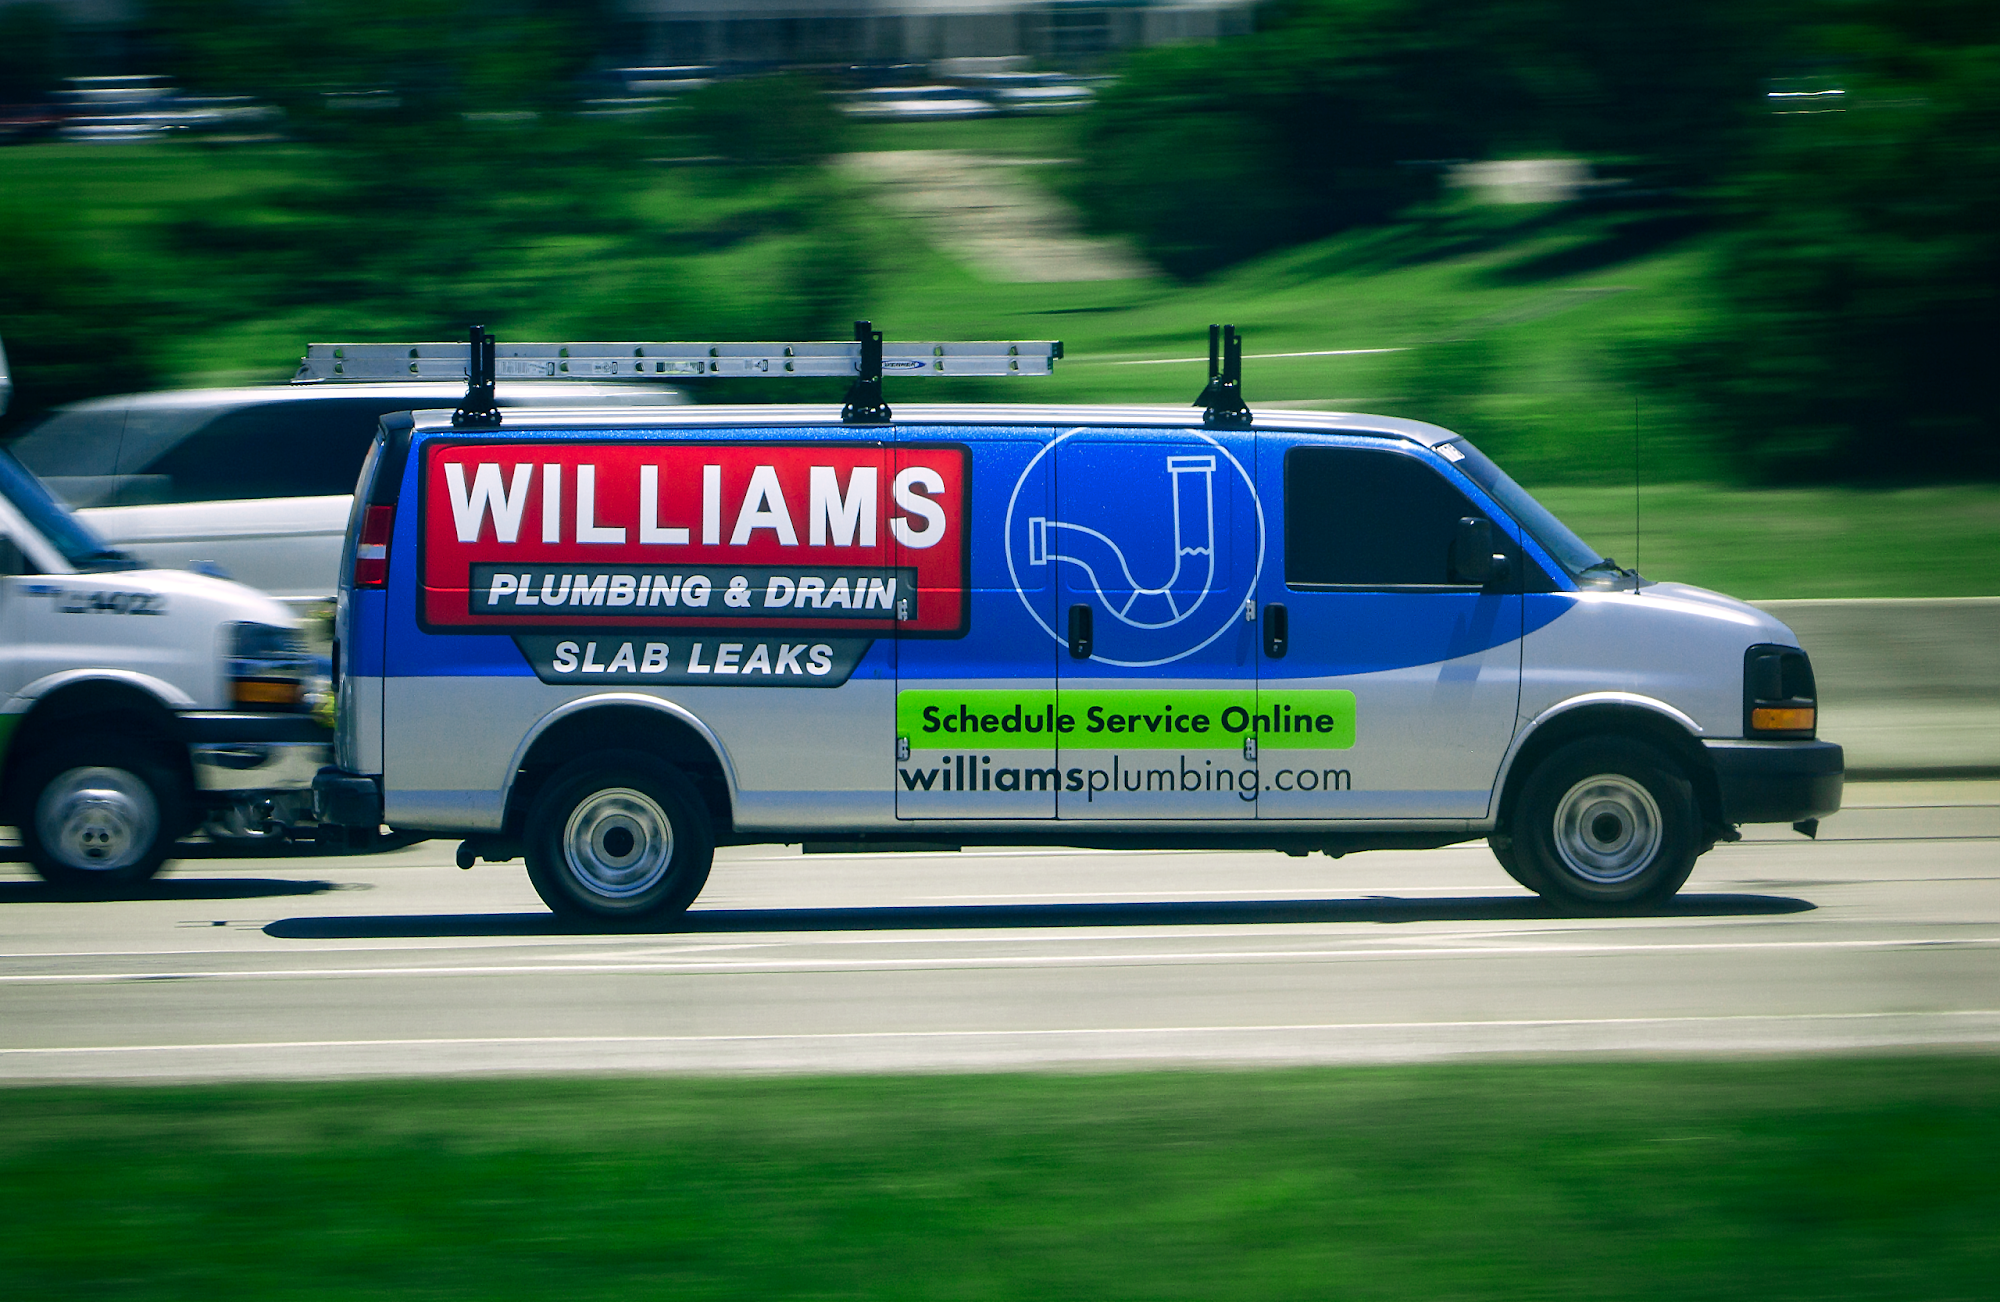 Williams Plumbing & Drain Service